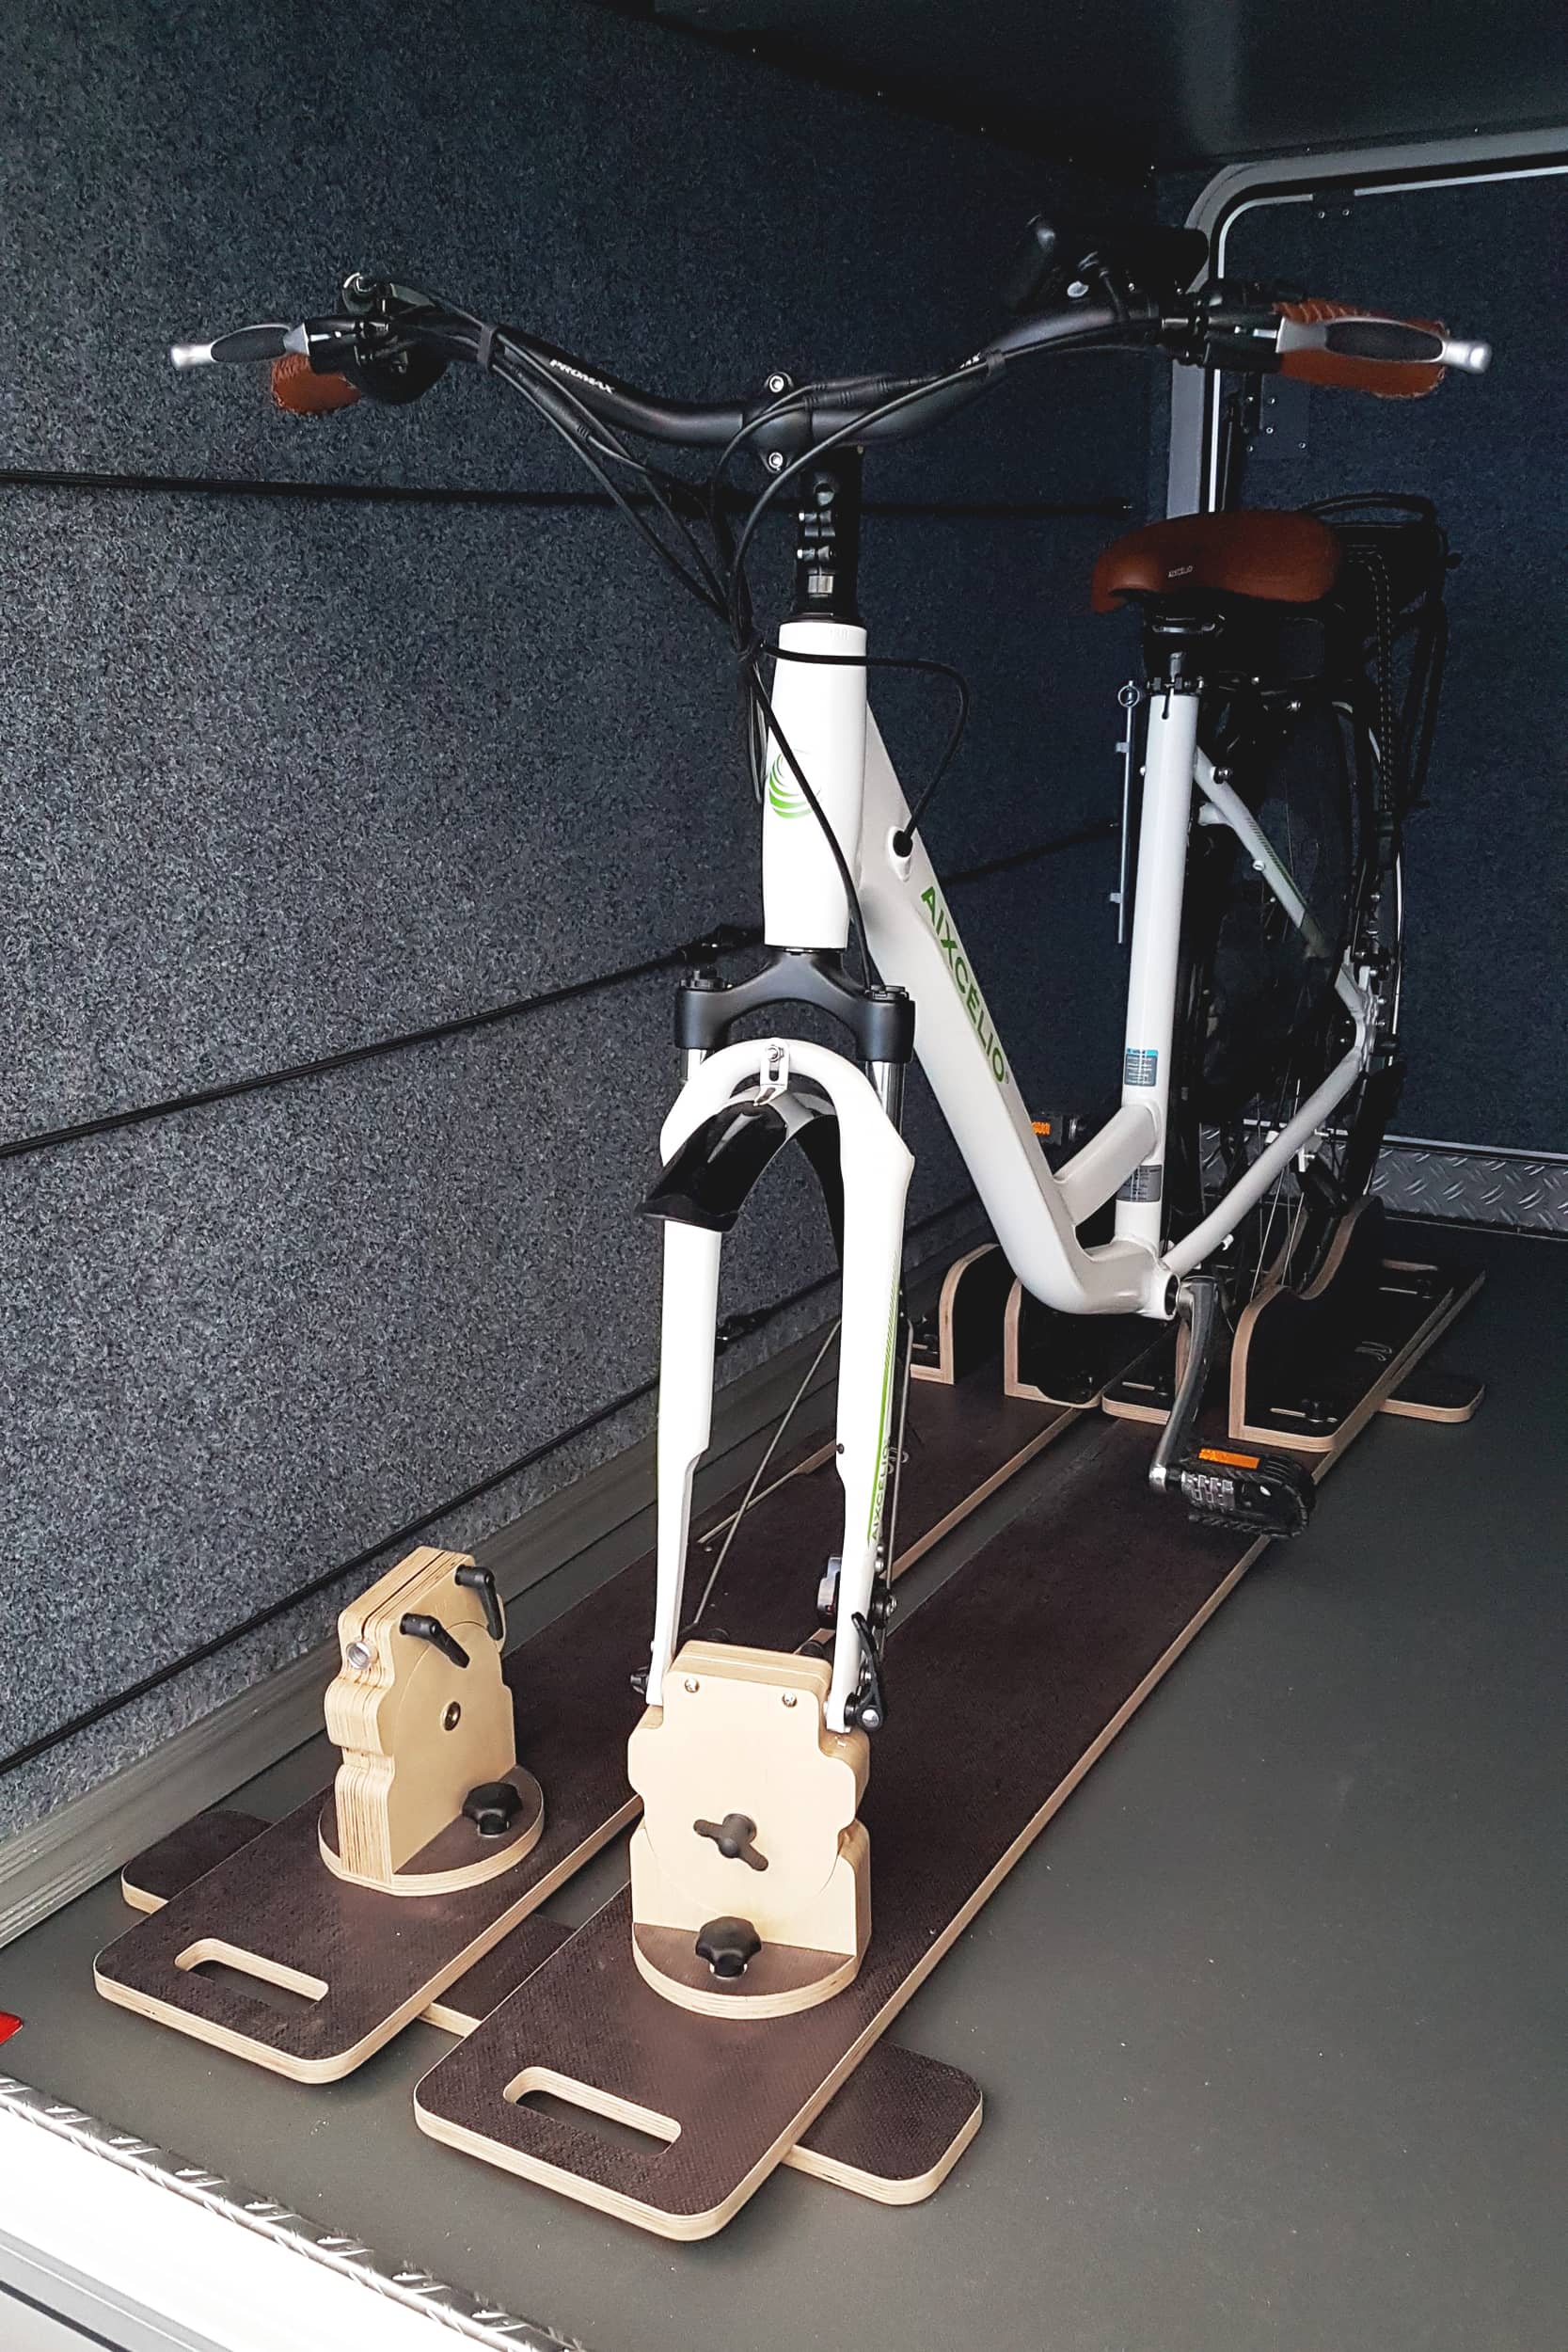 Porte-vélo intérieur de véhicule, Tidy système innovant by JV